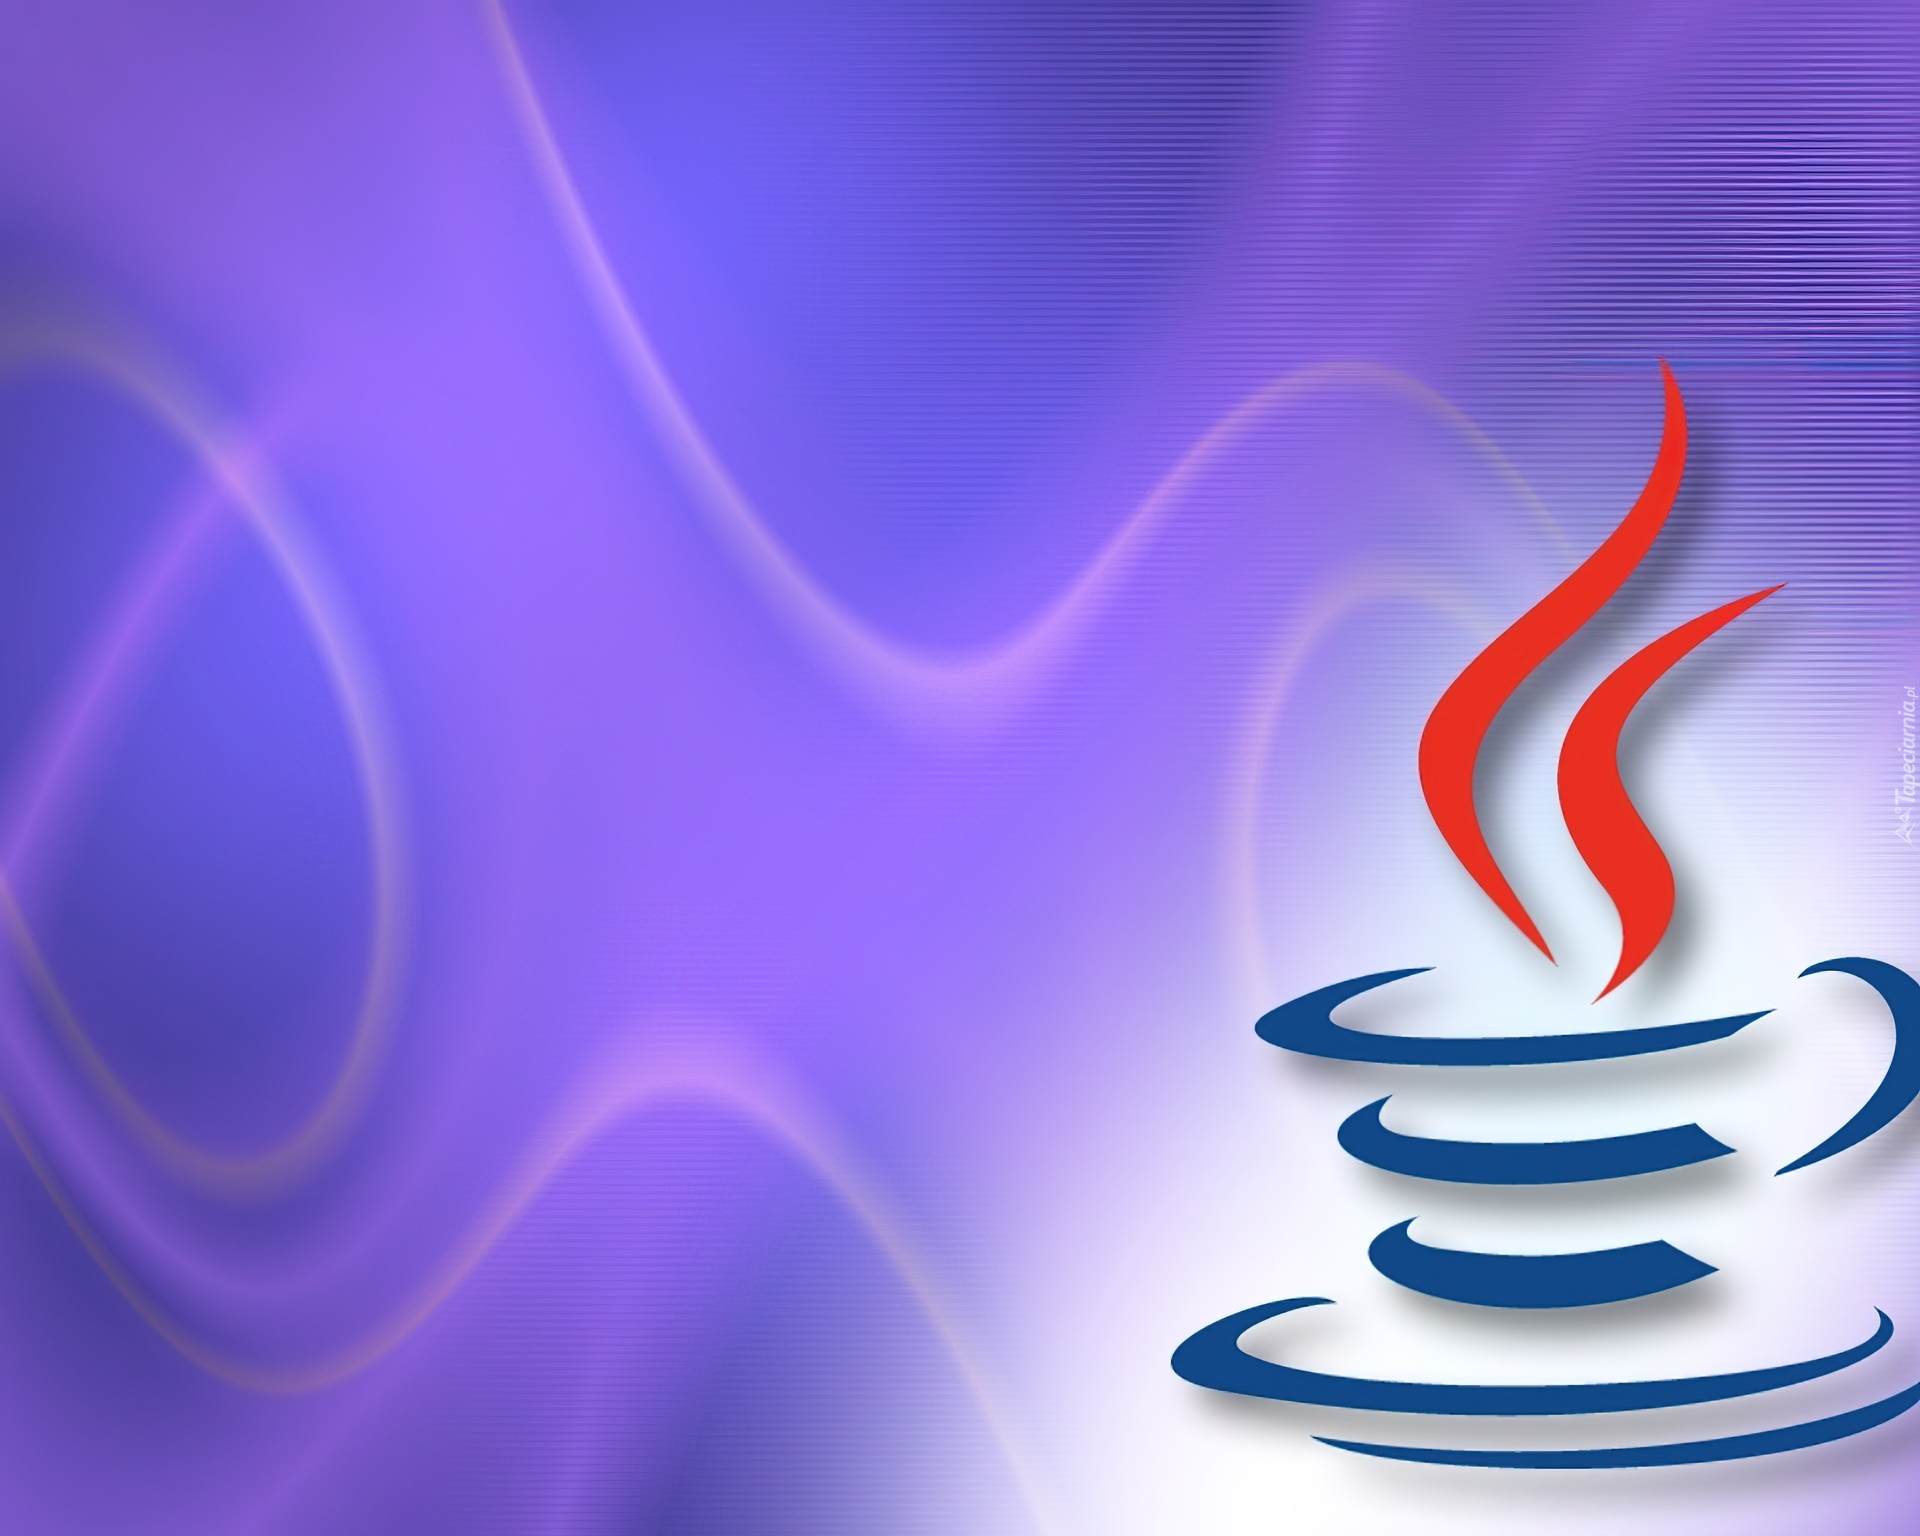 Java round. Java логотип. Java заставка. Java обои на ПК. Java обои для рабочего стола 1920х1080.